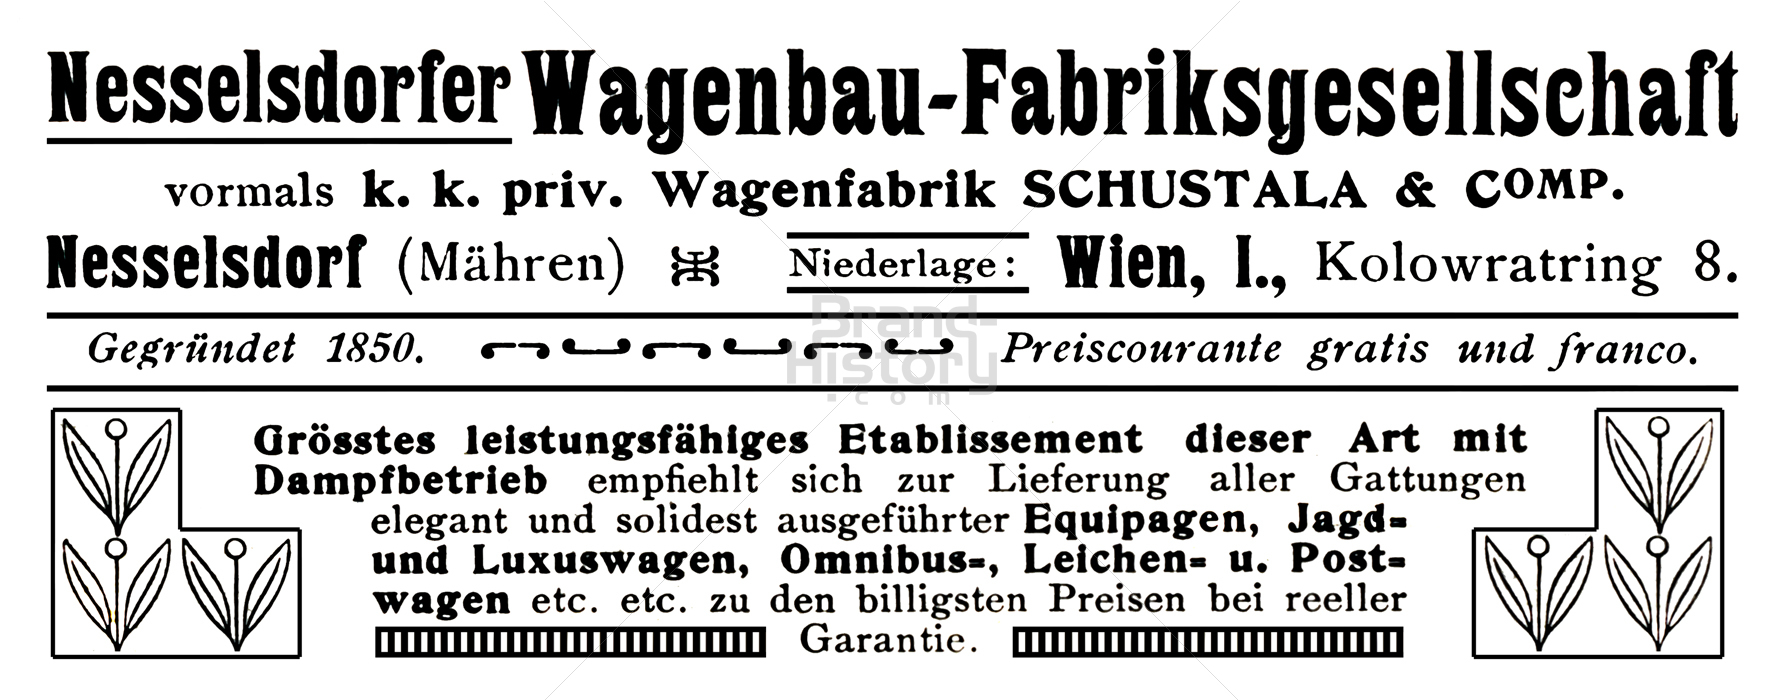 Nesselsdorfer Wagenbau-Fabriksgesellschaft